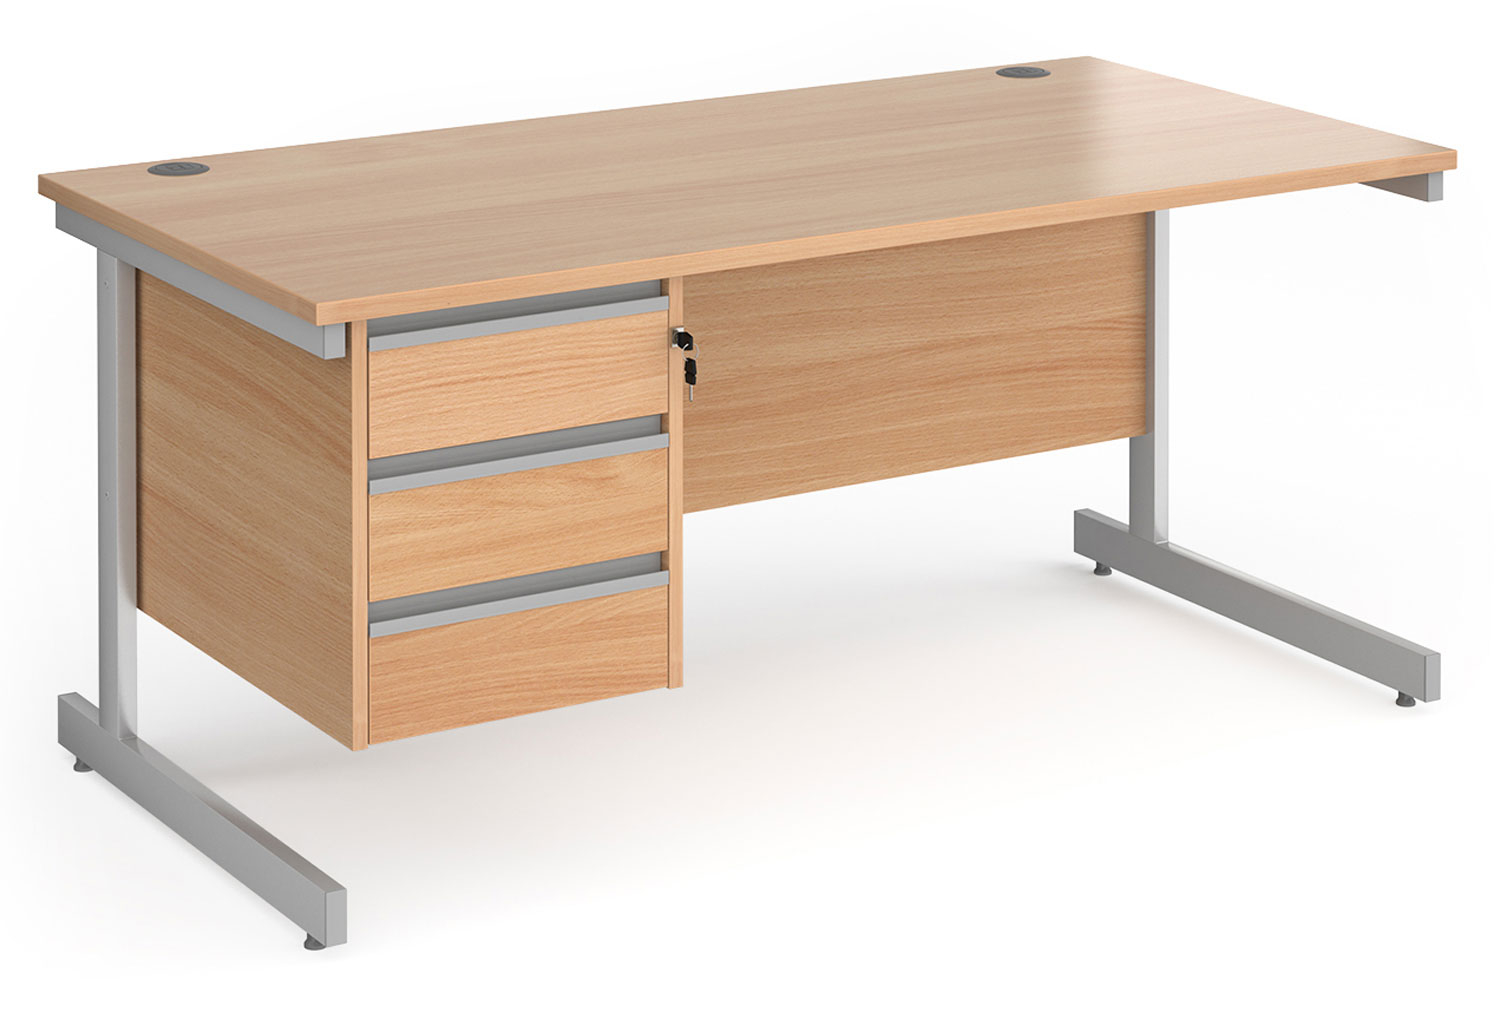 Value Line Classic+ Rectangular C-Leg Office Desk 3 Drawers (Silver Leg), 160wx80dx73h (cm), Beech, Express Delivery